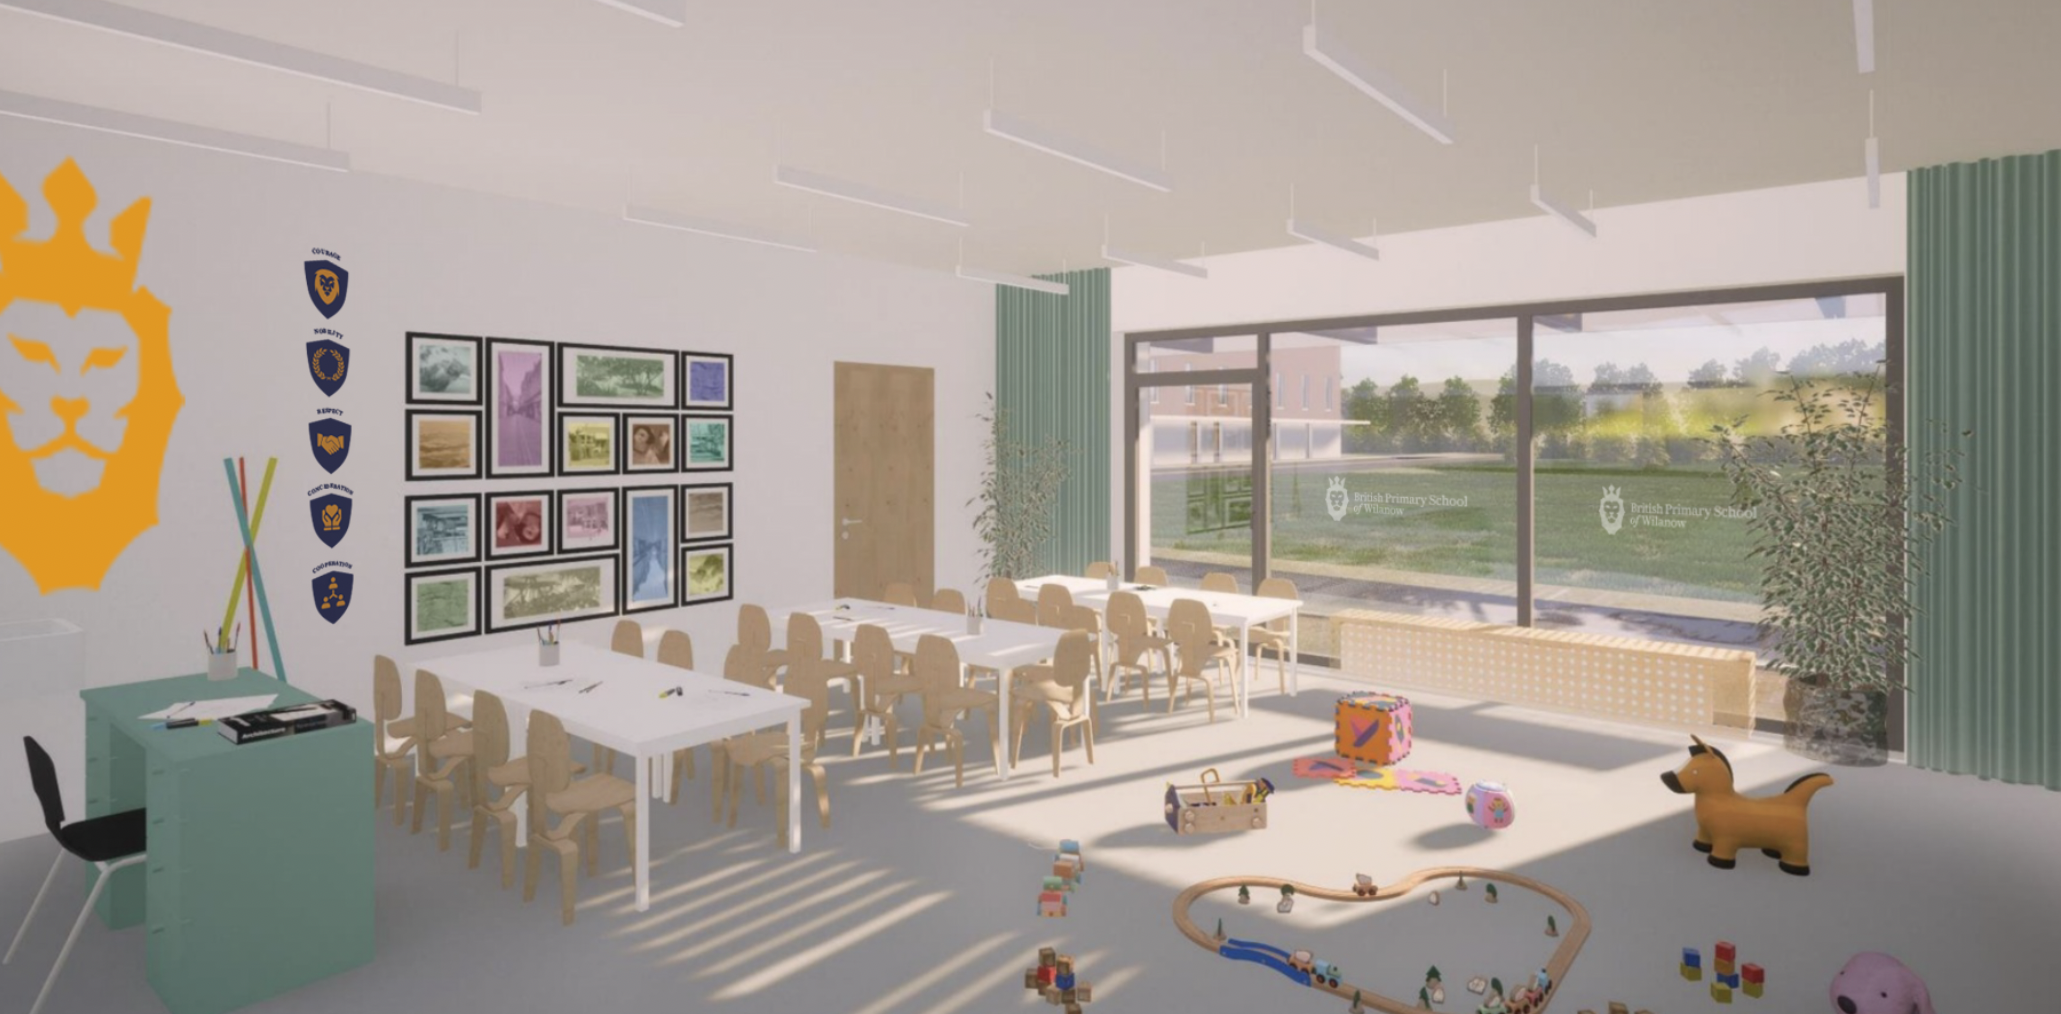 Architect’s impression of new Preschool classroom.